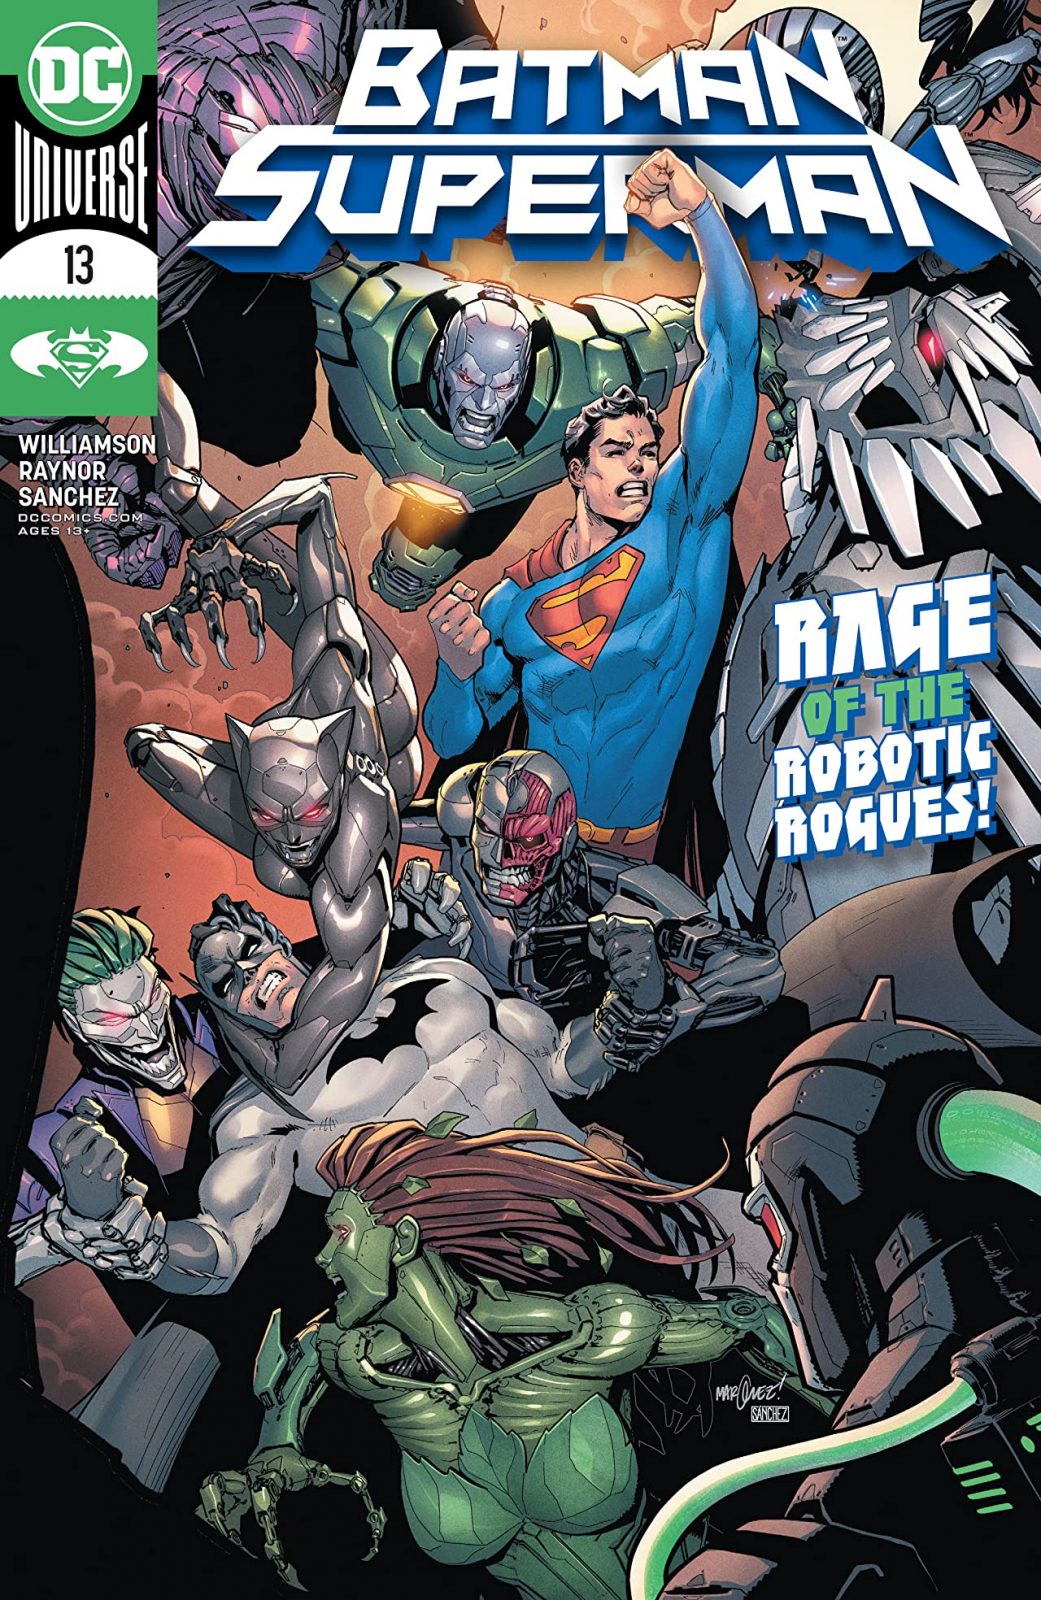 BATMAN/SUPERMAN #13 – The Aspiring Kryptonian